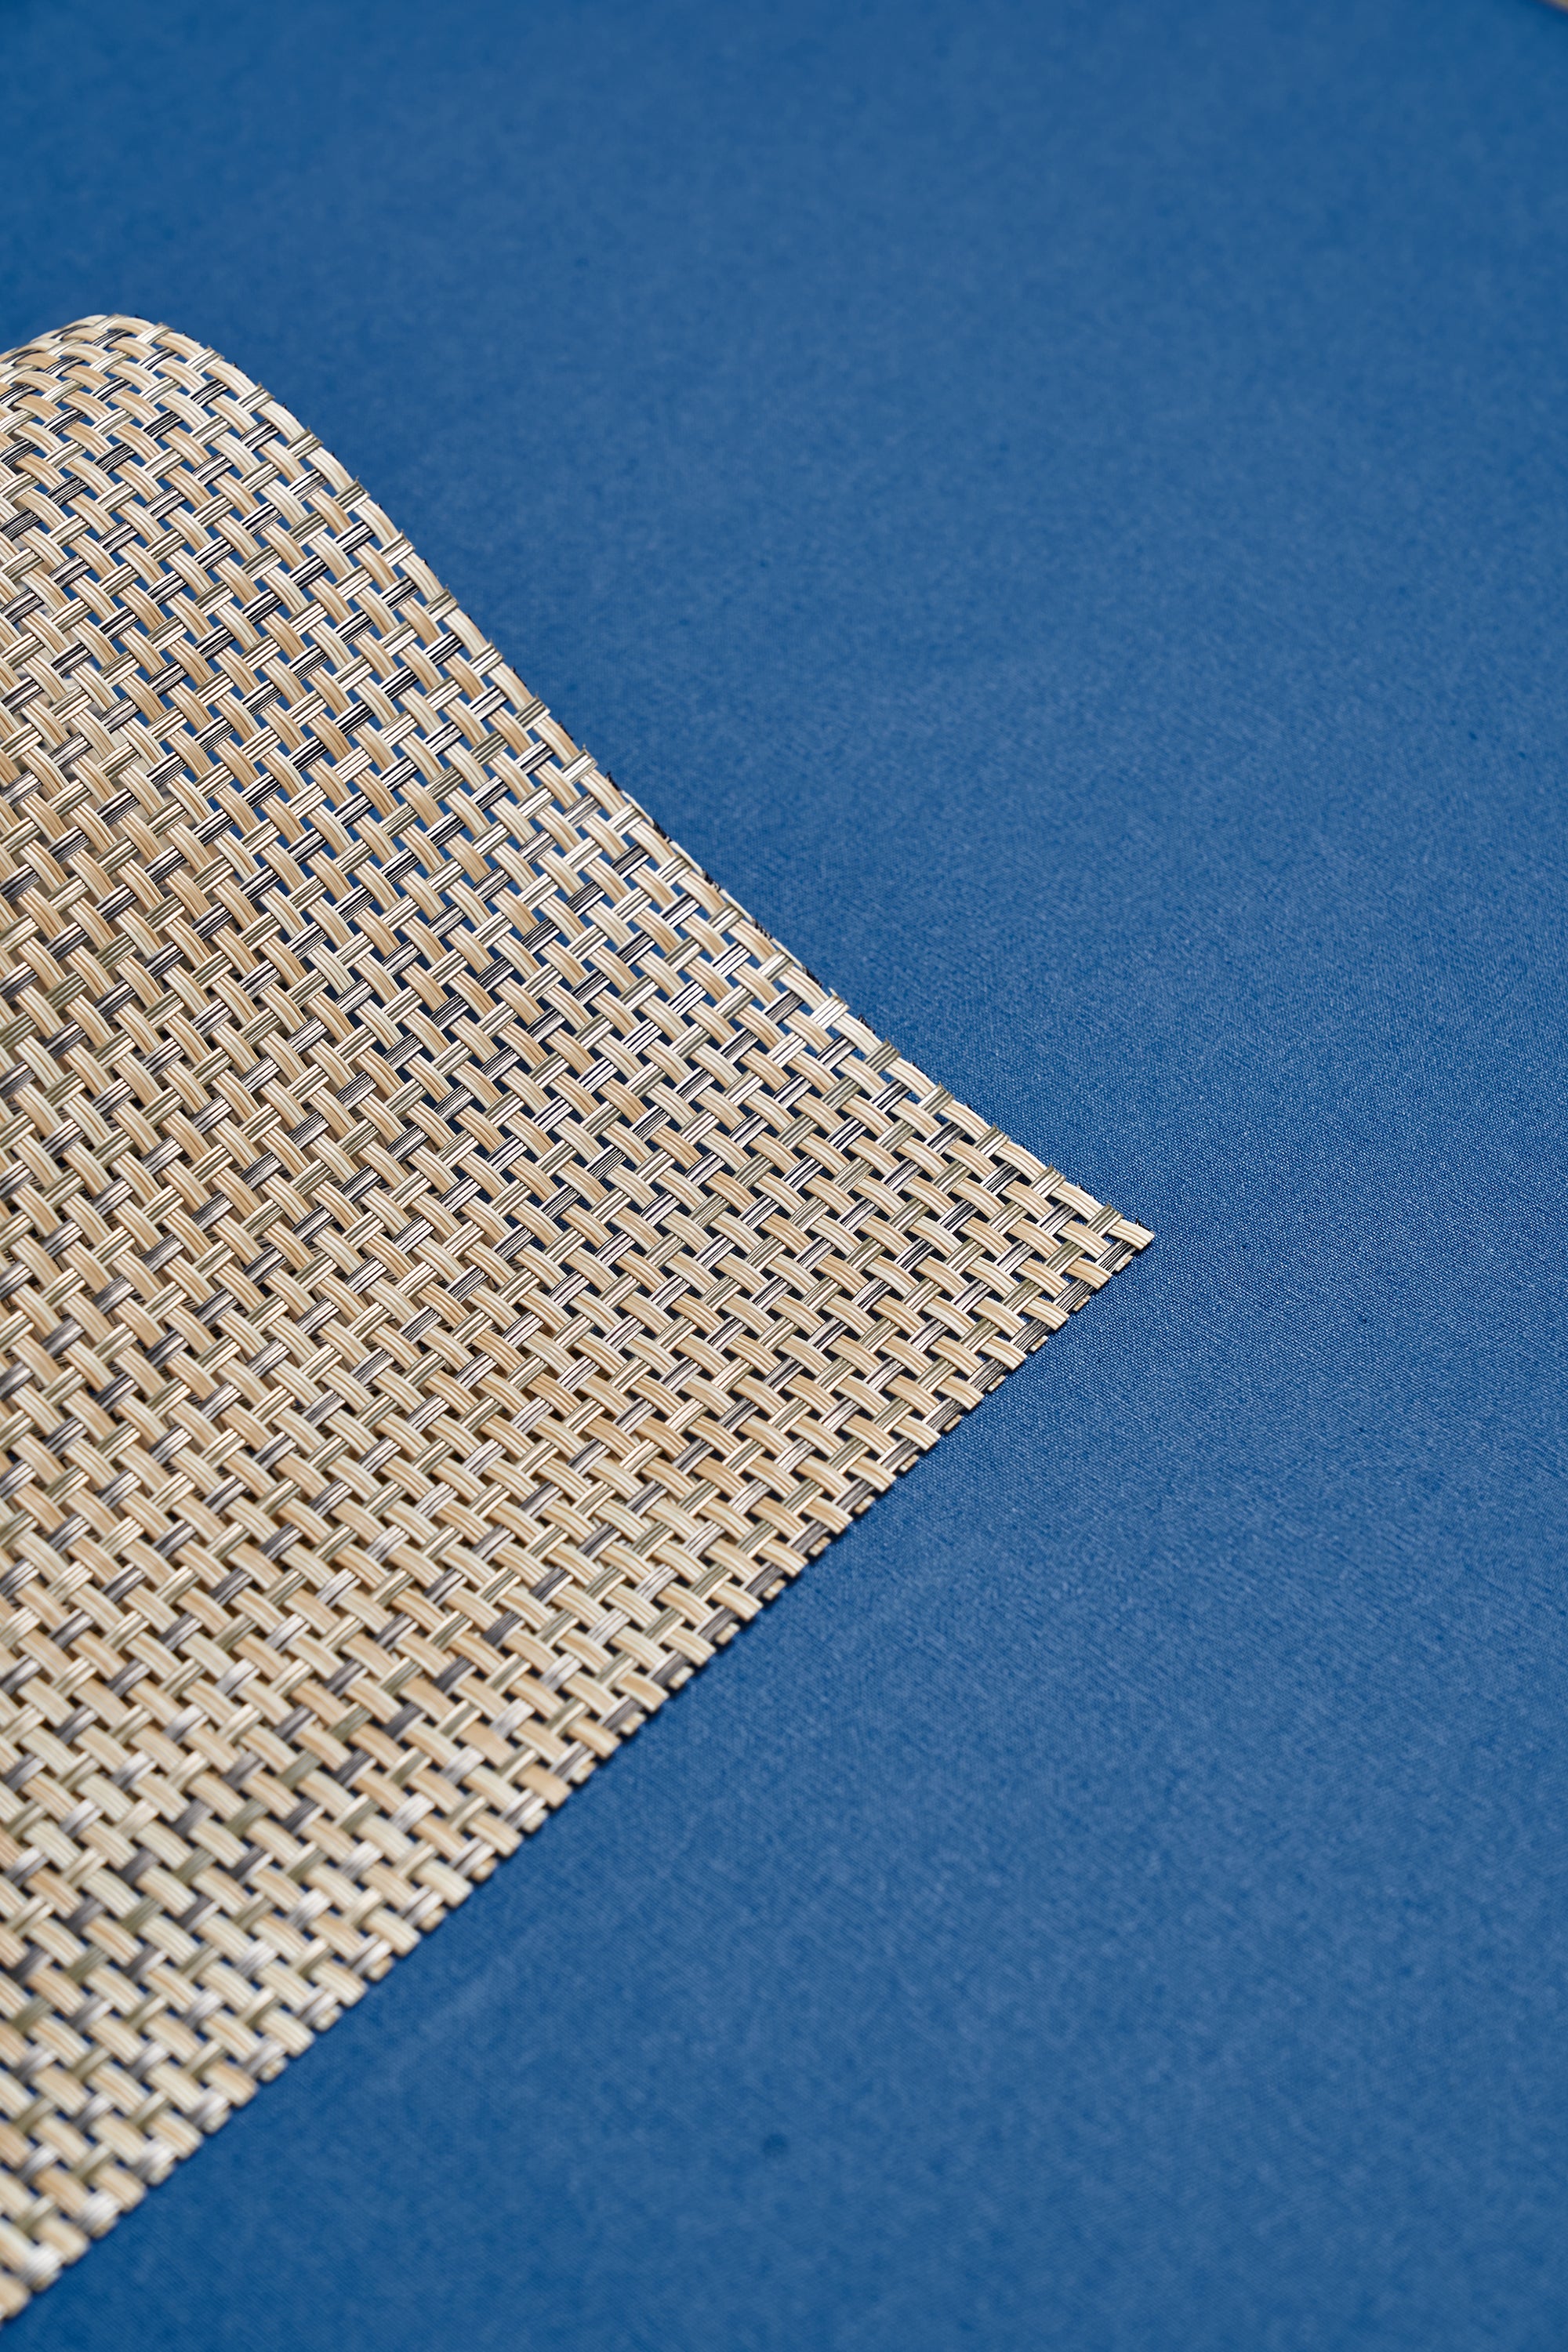 Han&Co. Table Cloth – Beige Sapphire ผ้าปูโต๊ะ ผ้าคลุมโต๊ะ สี Beige Sapphire HCTBC02